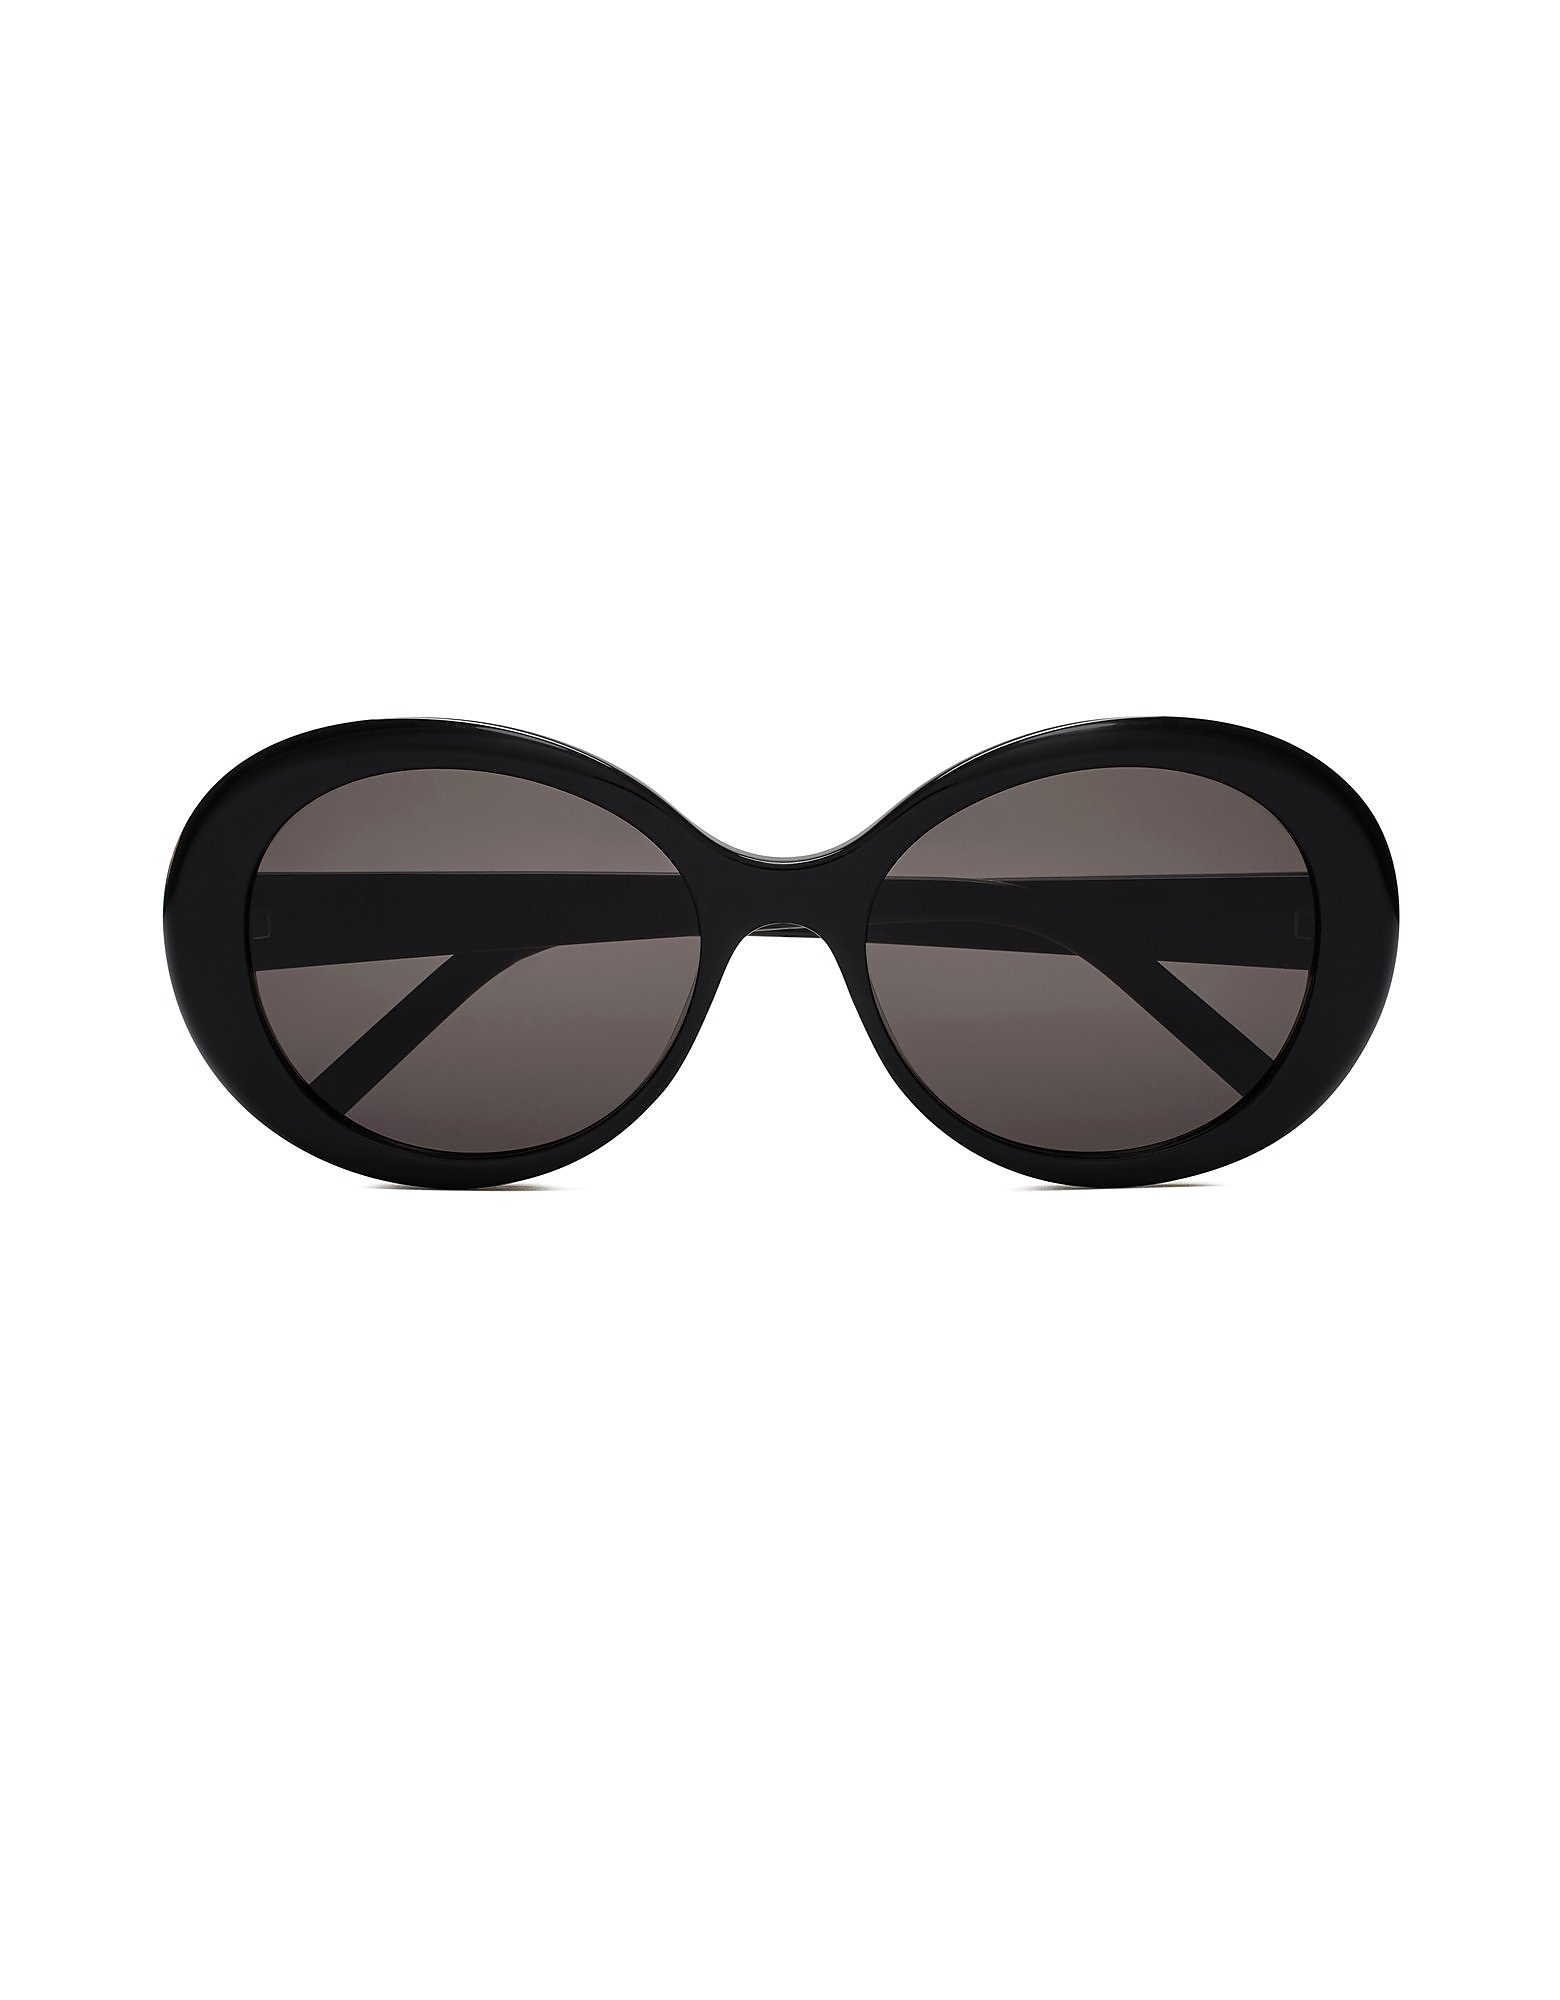 Saint Laurent Sunglasses Round Butterfly Acetate Women's Sunglasses